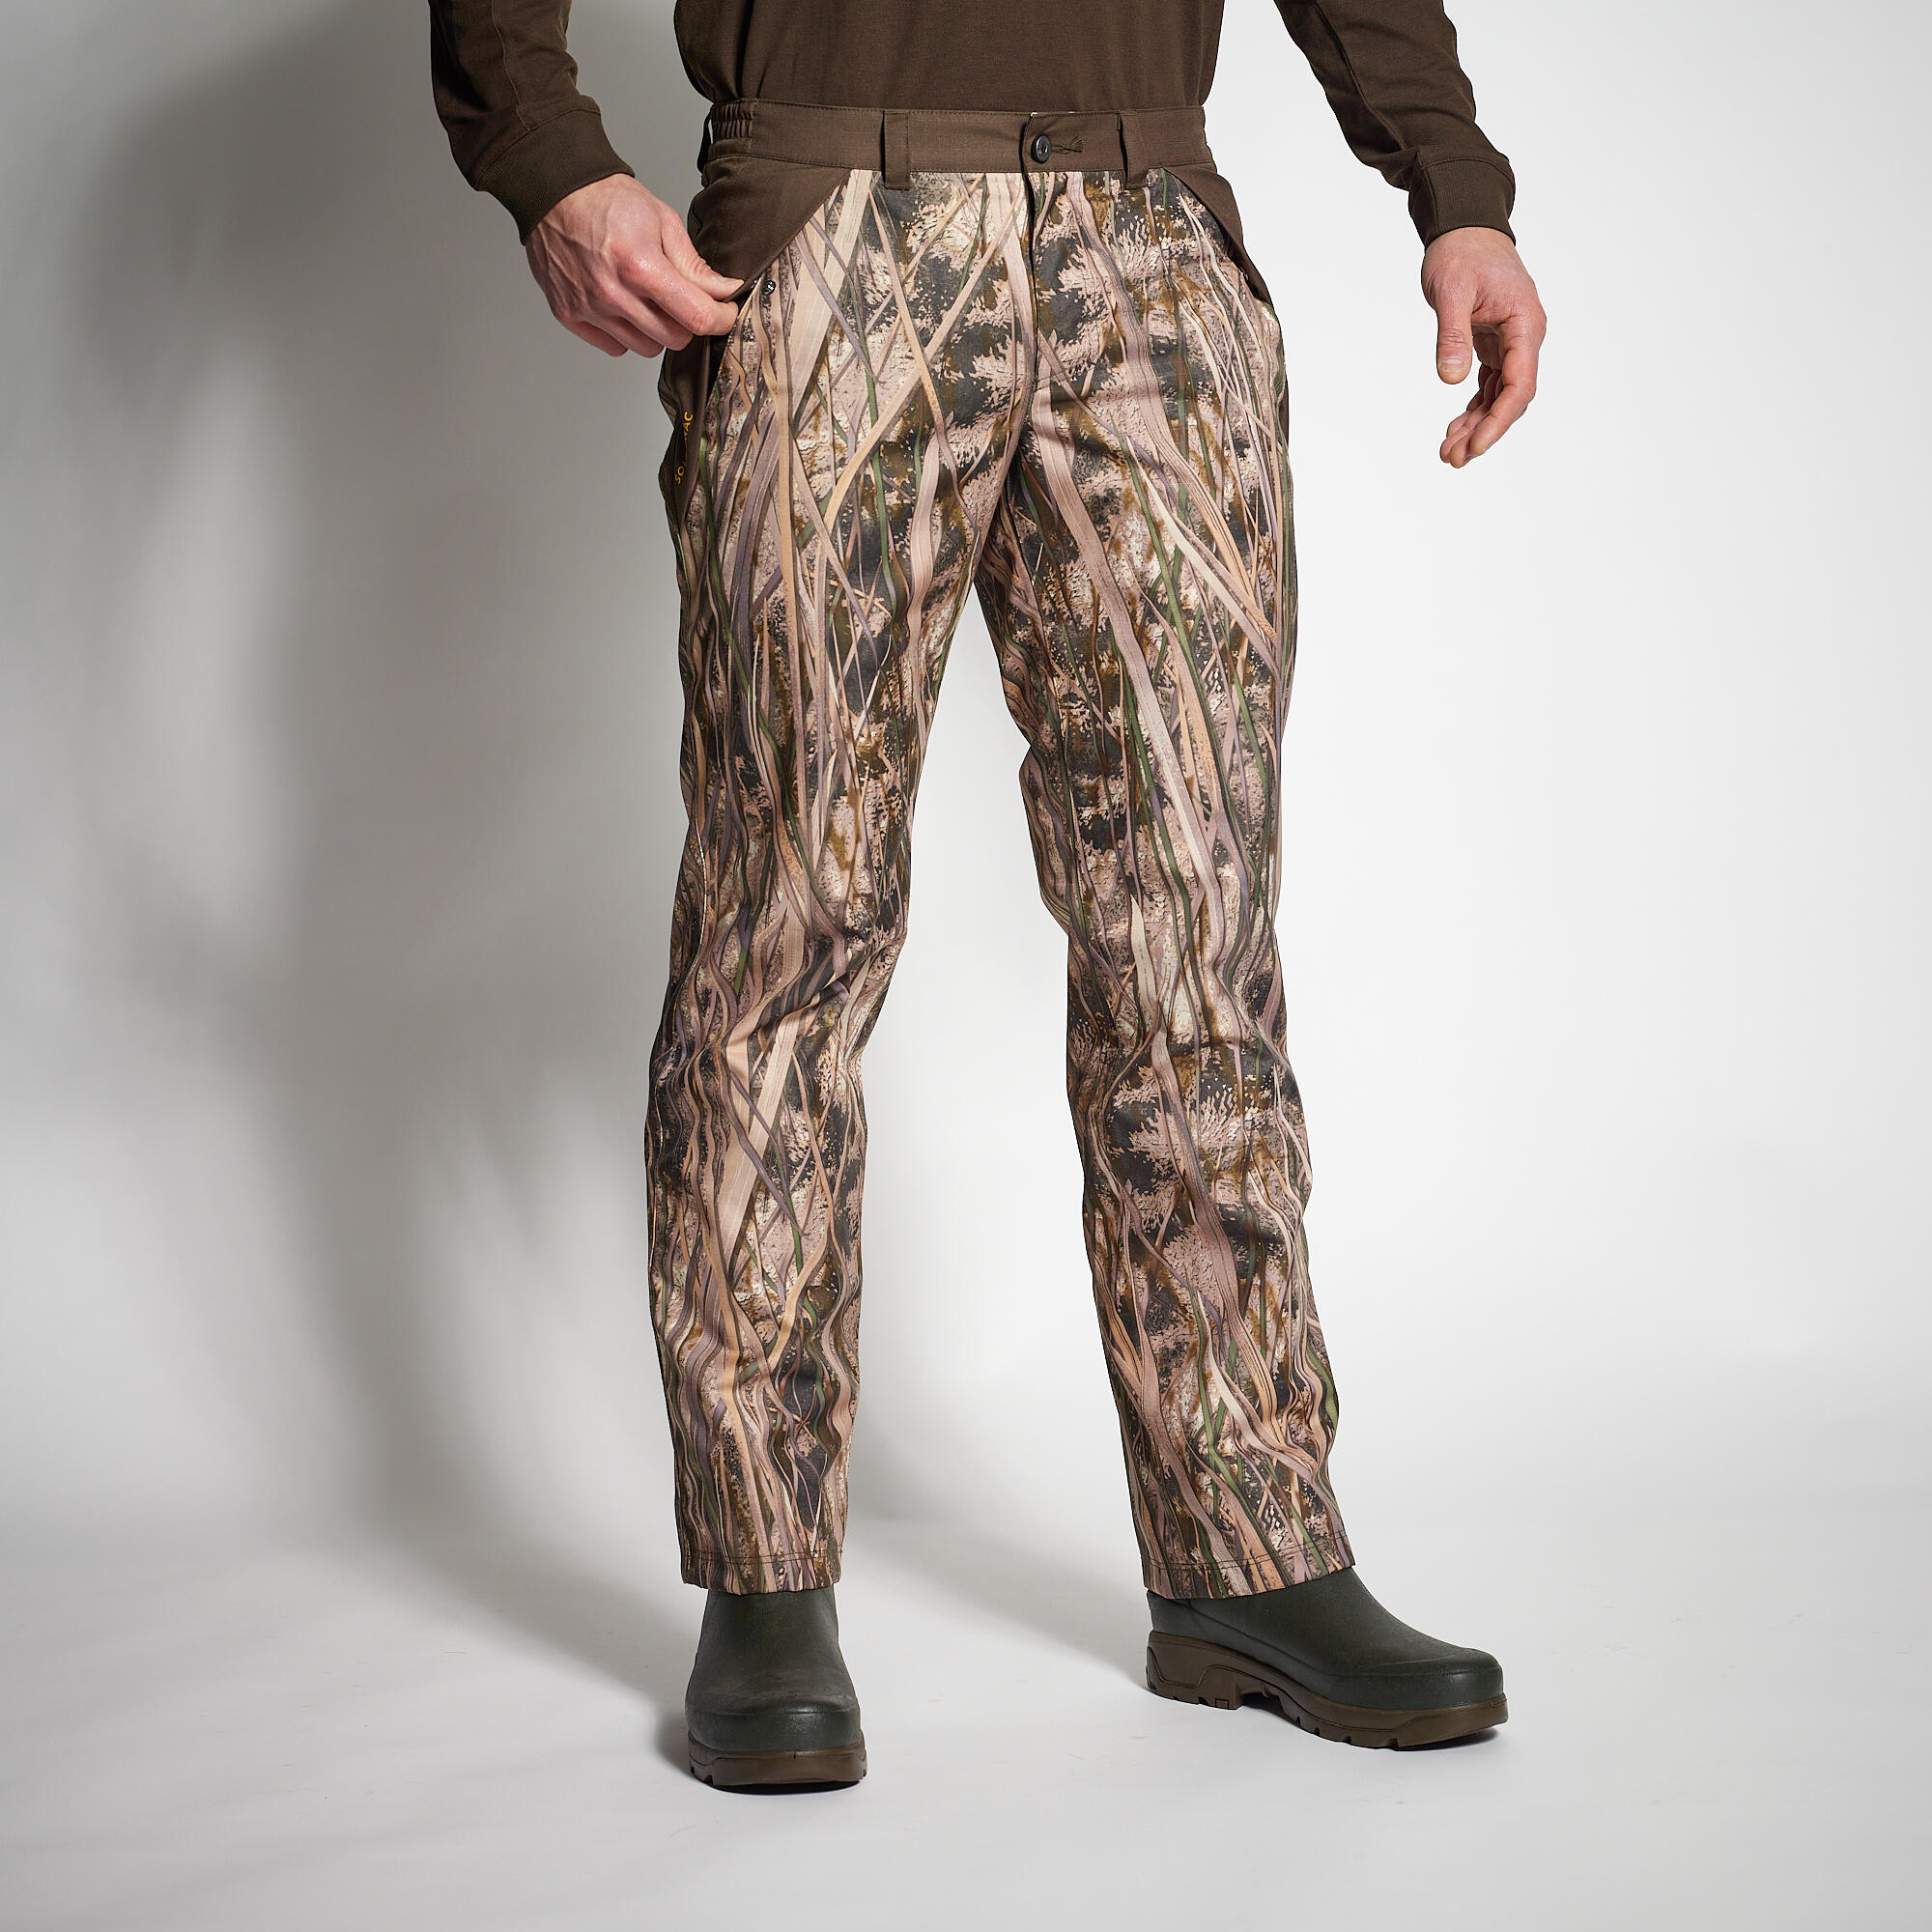 Hunting Trousers - Renfort 520 Brown - Bark brown, Deep shale - Solognac -  Decathlon